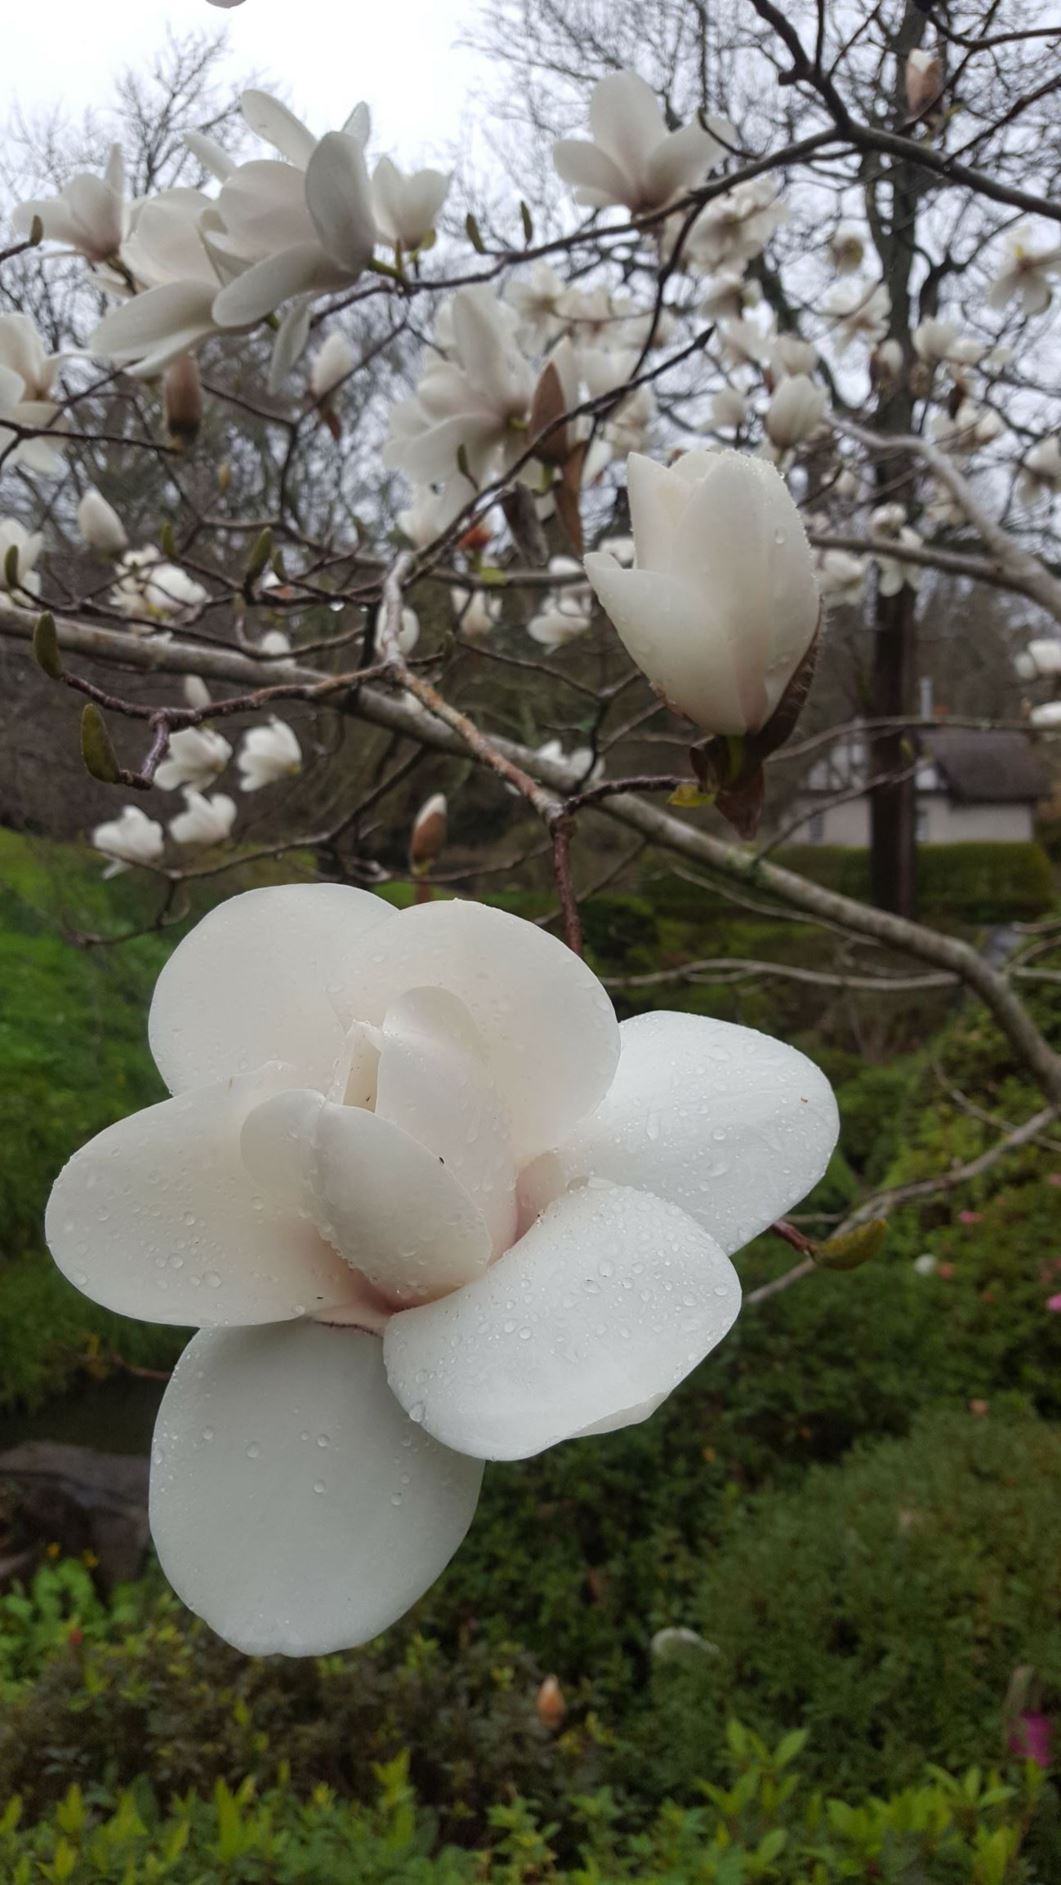 Magnolia 'David Clulow'